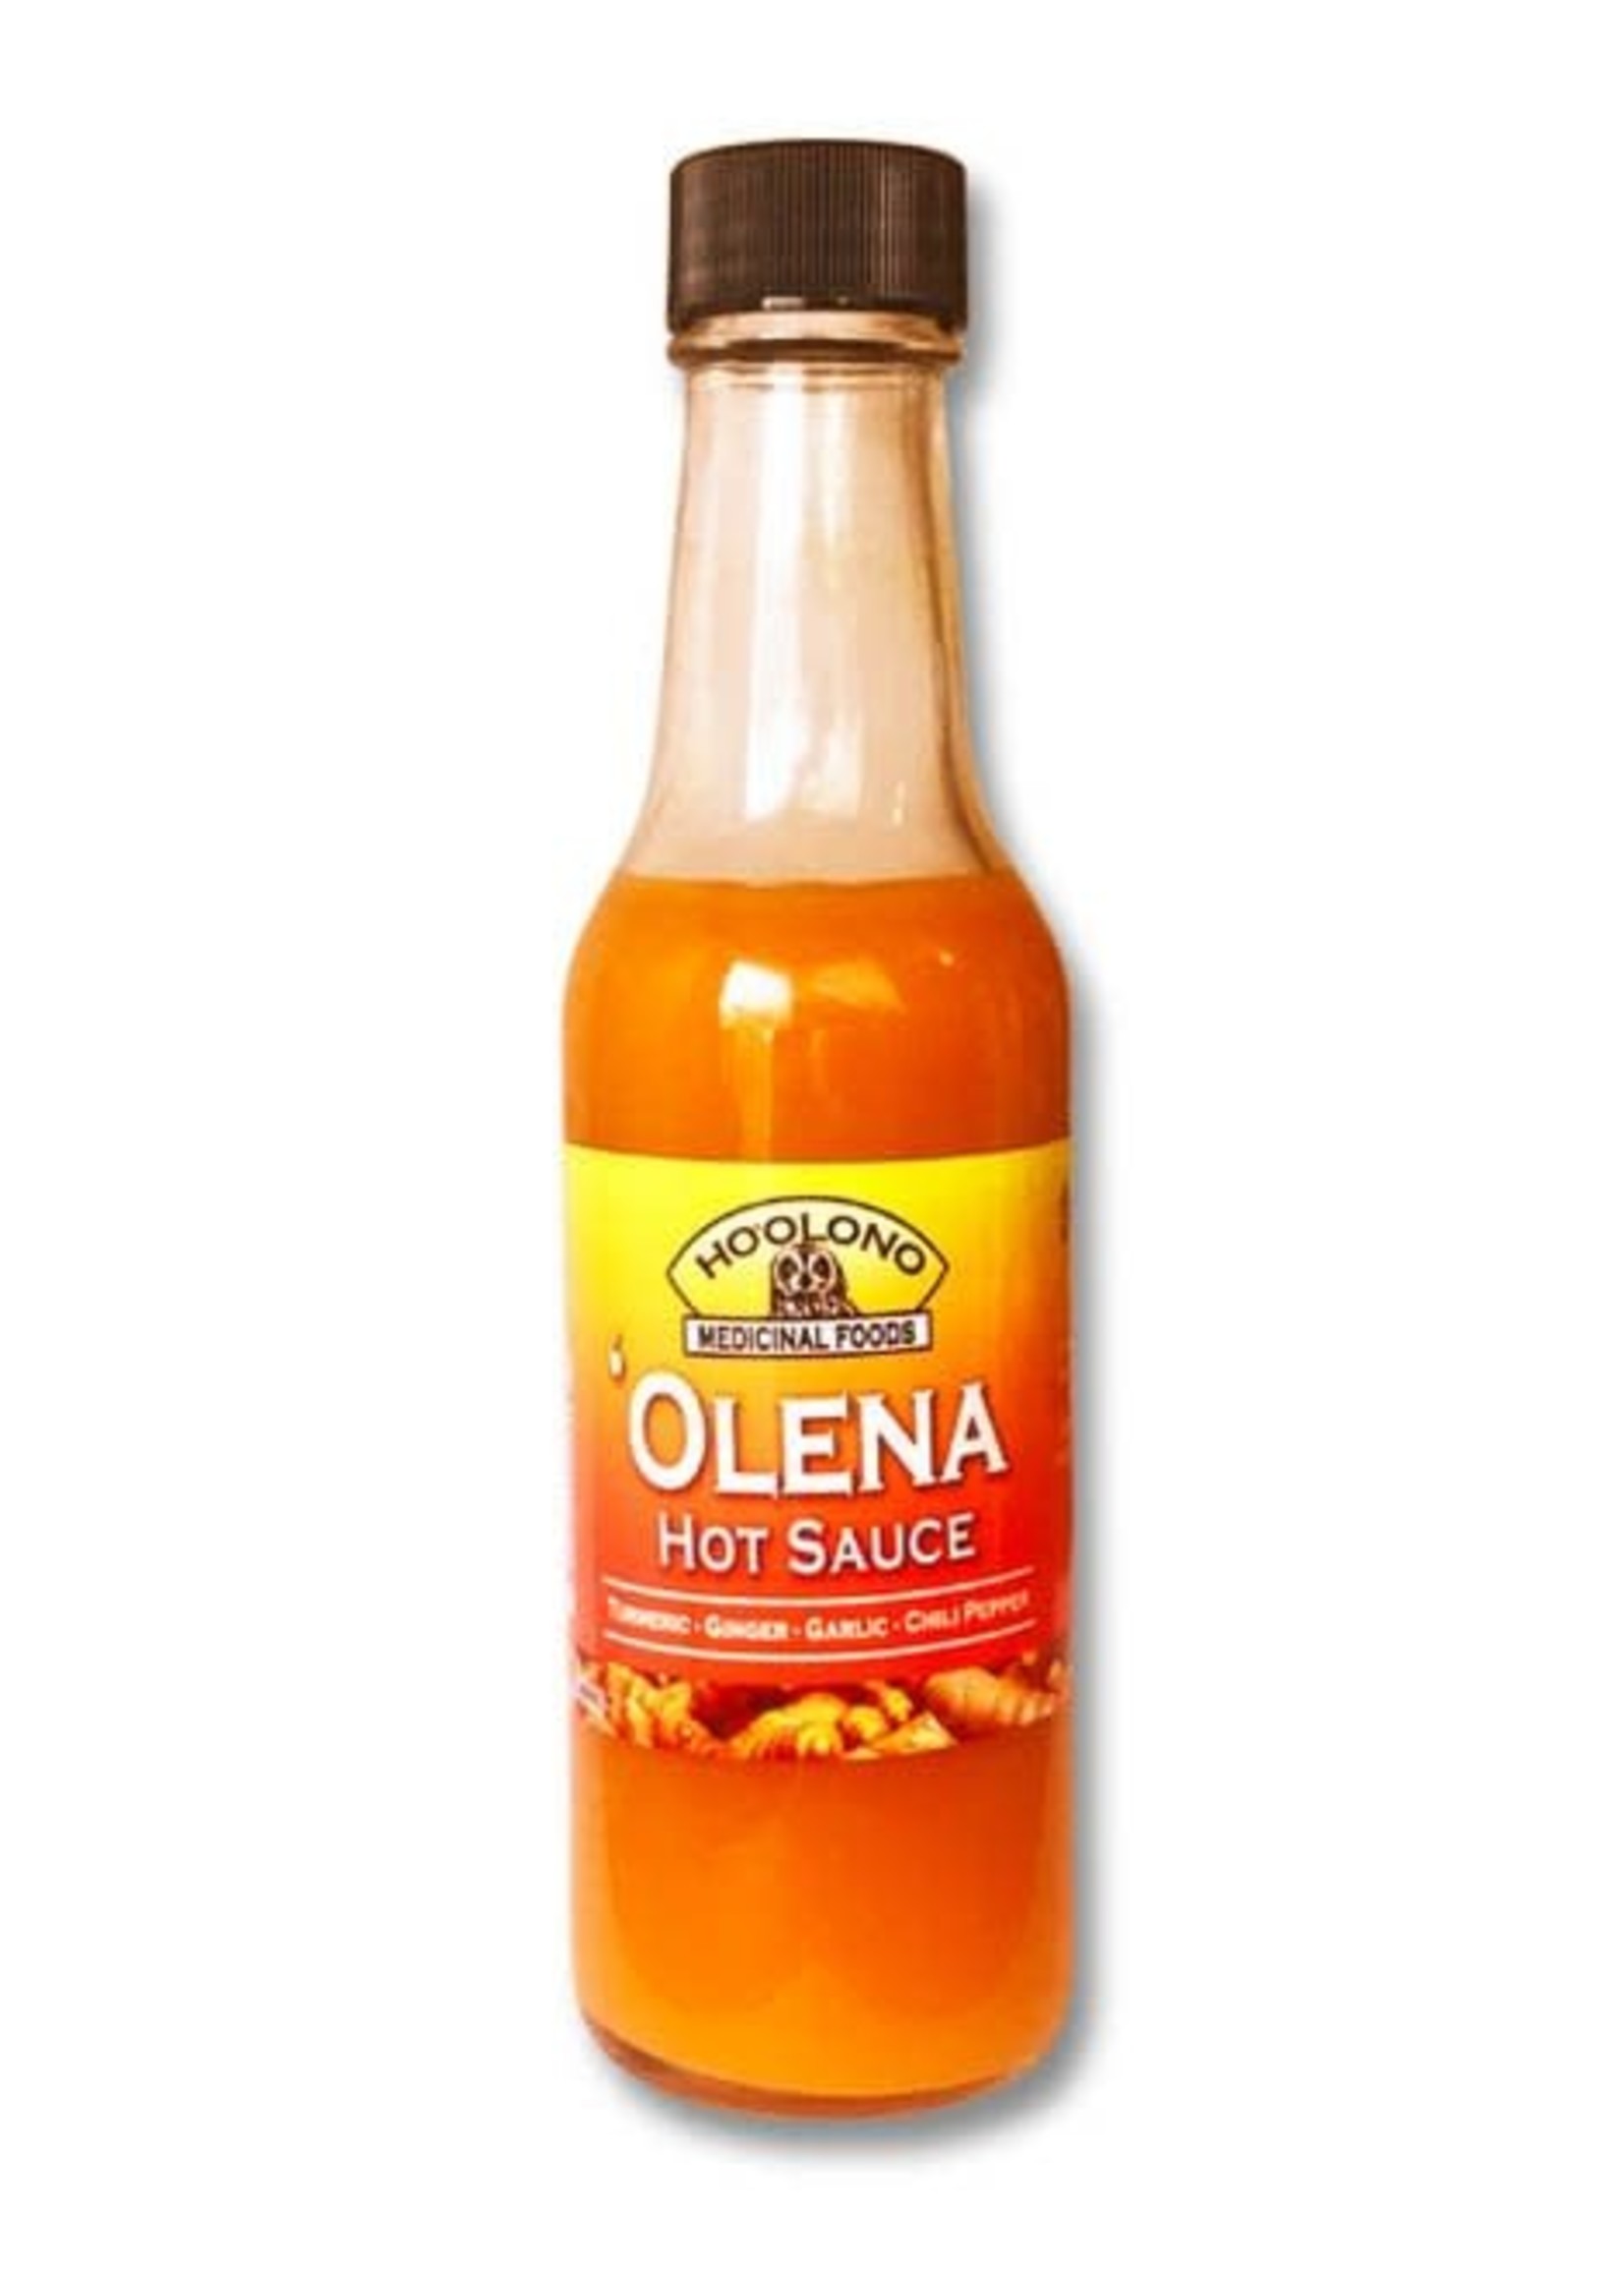 Ho’olono Natural Remedies ‘Olena Hot Sauce 5oz Bottle